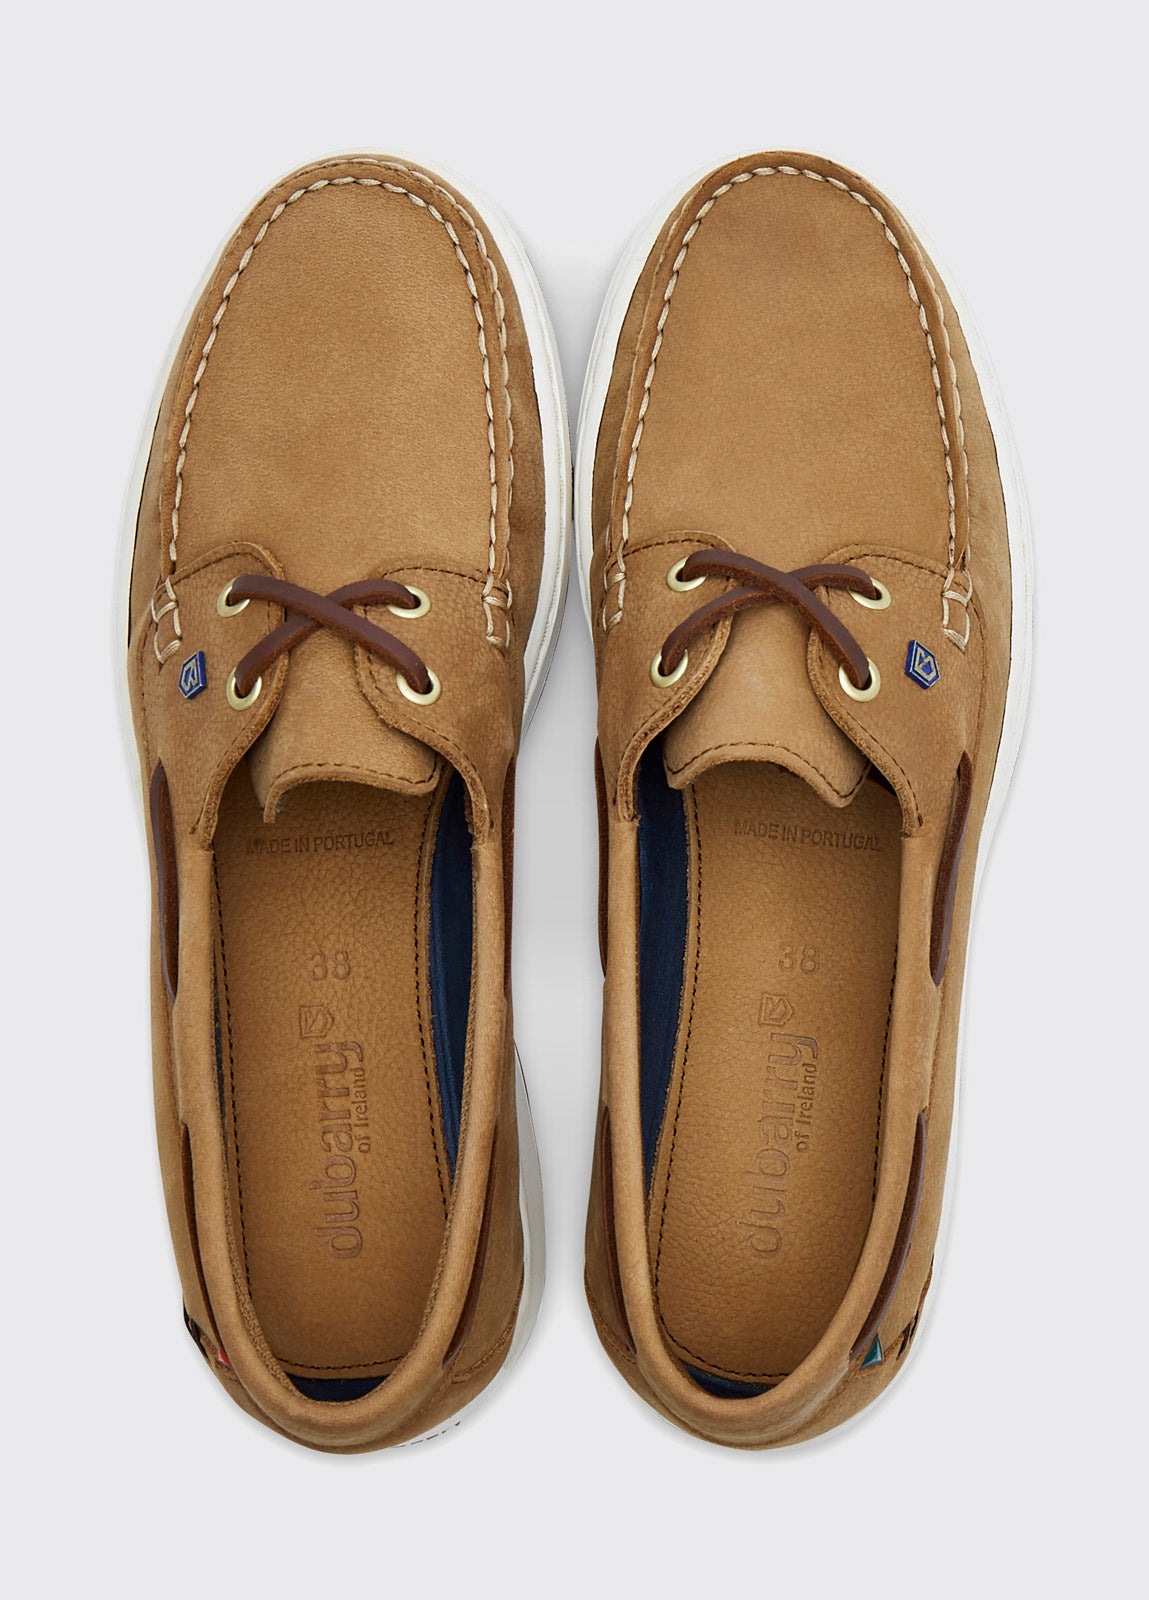 Dubarry Marbella Deck Shoe - Tan